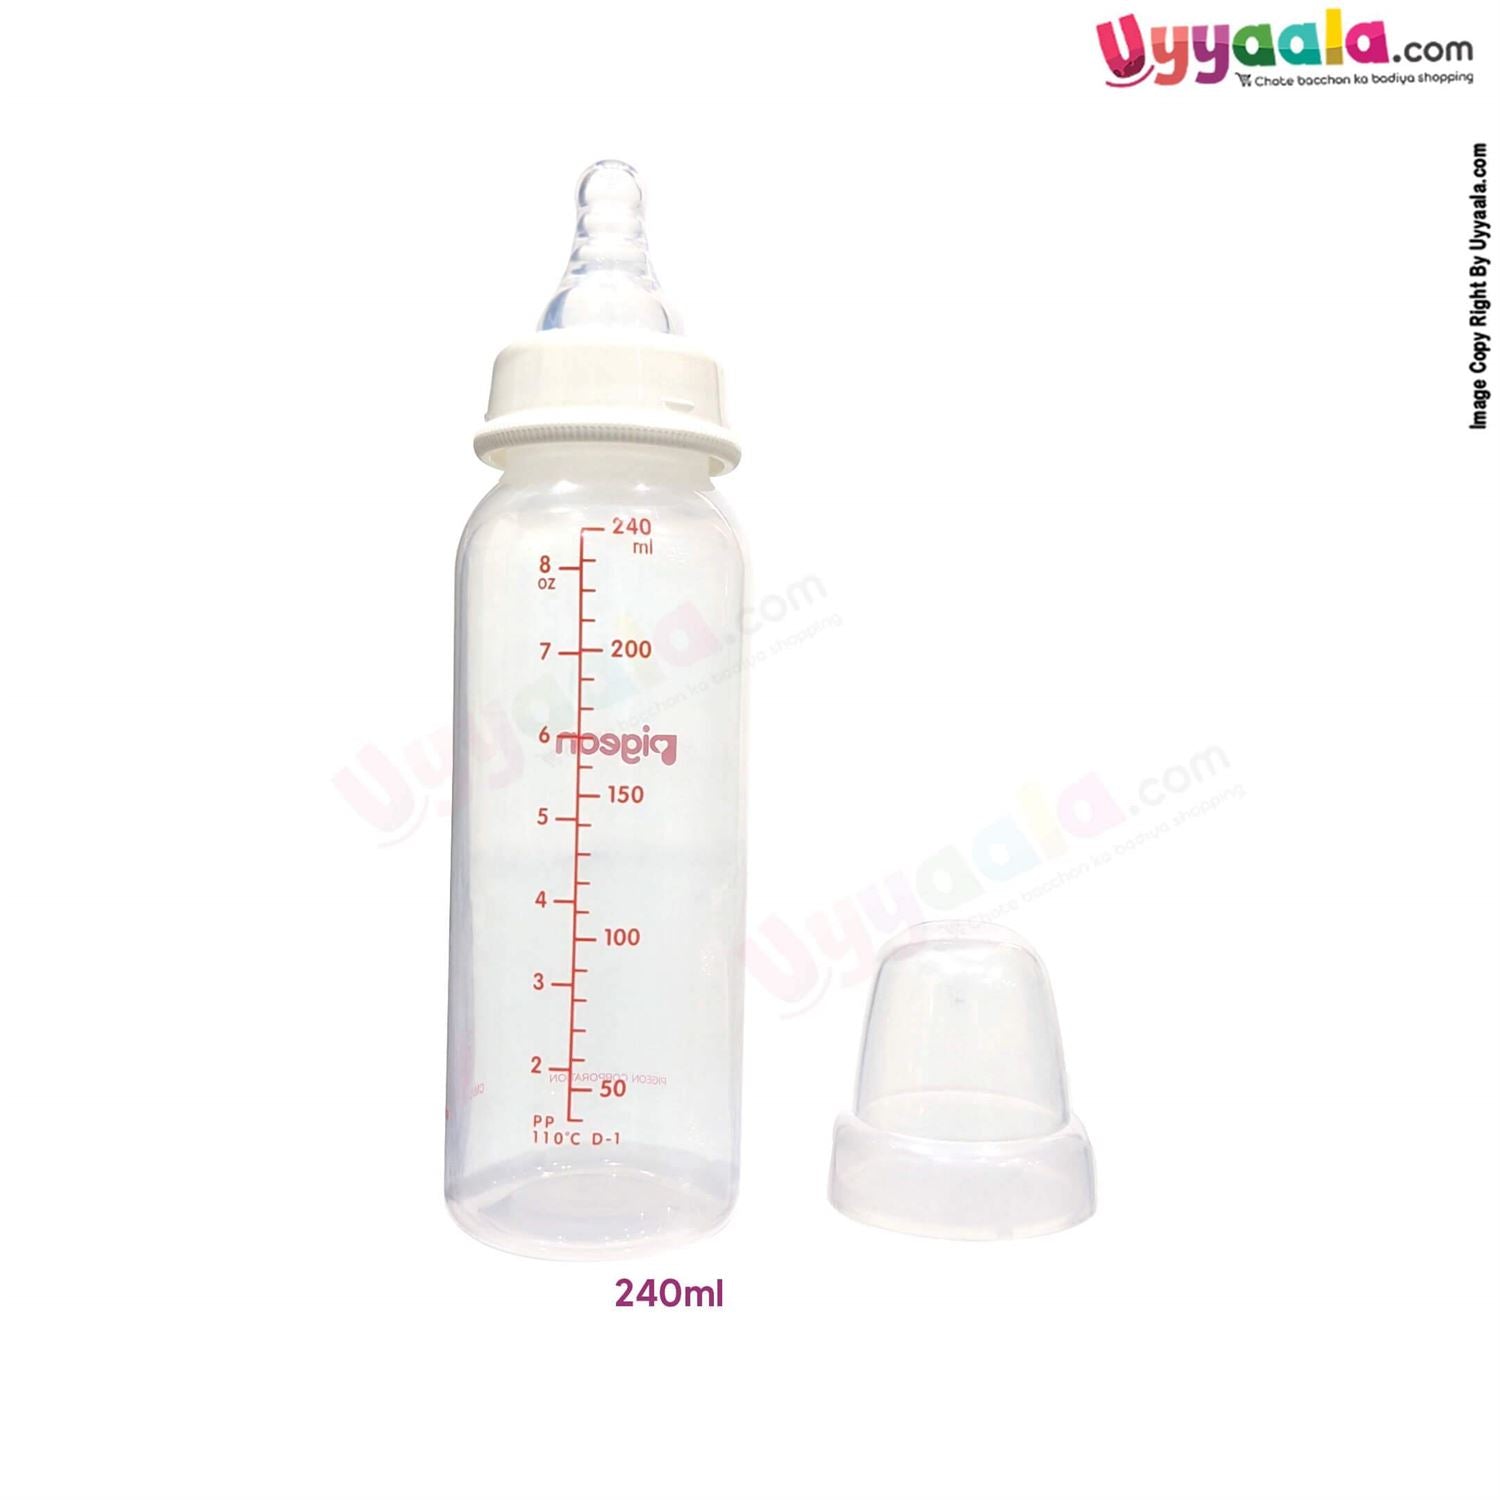 PIGEON Feeding Bottle Narrow Neck Round Base Flexible 4+m age - 240ml